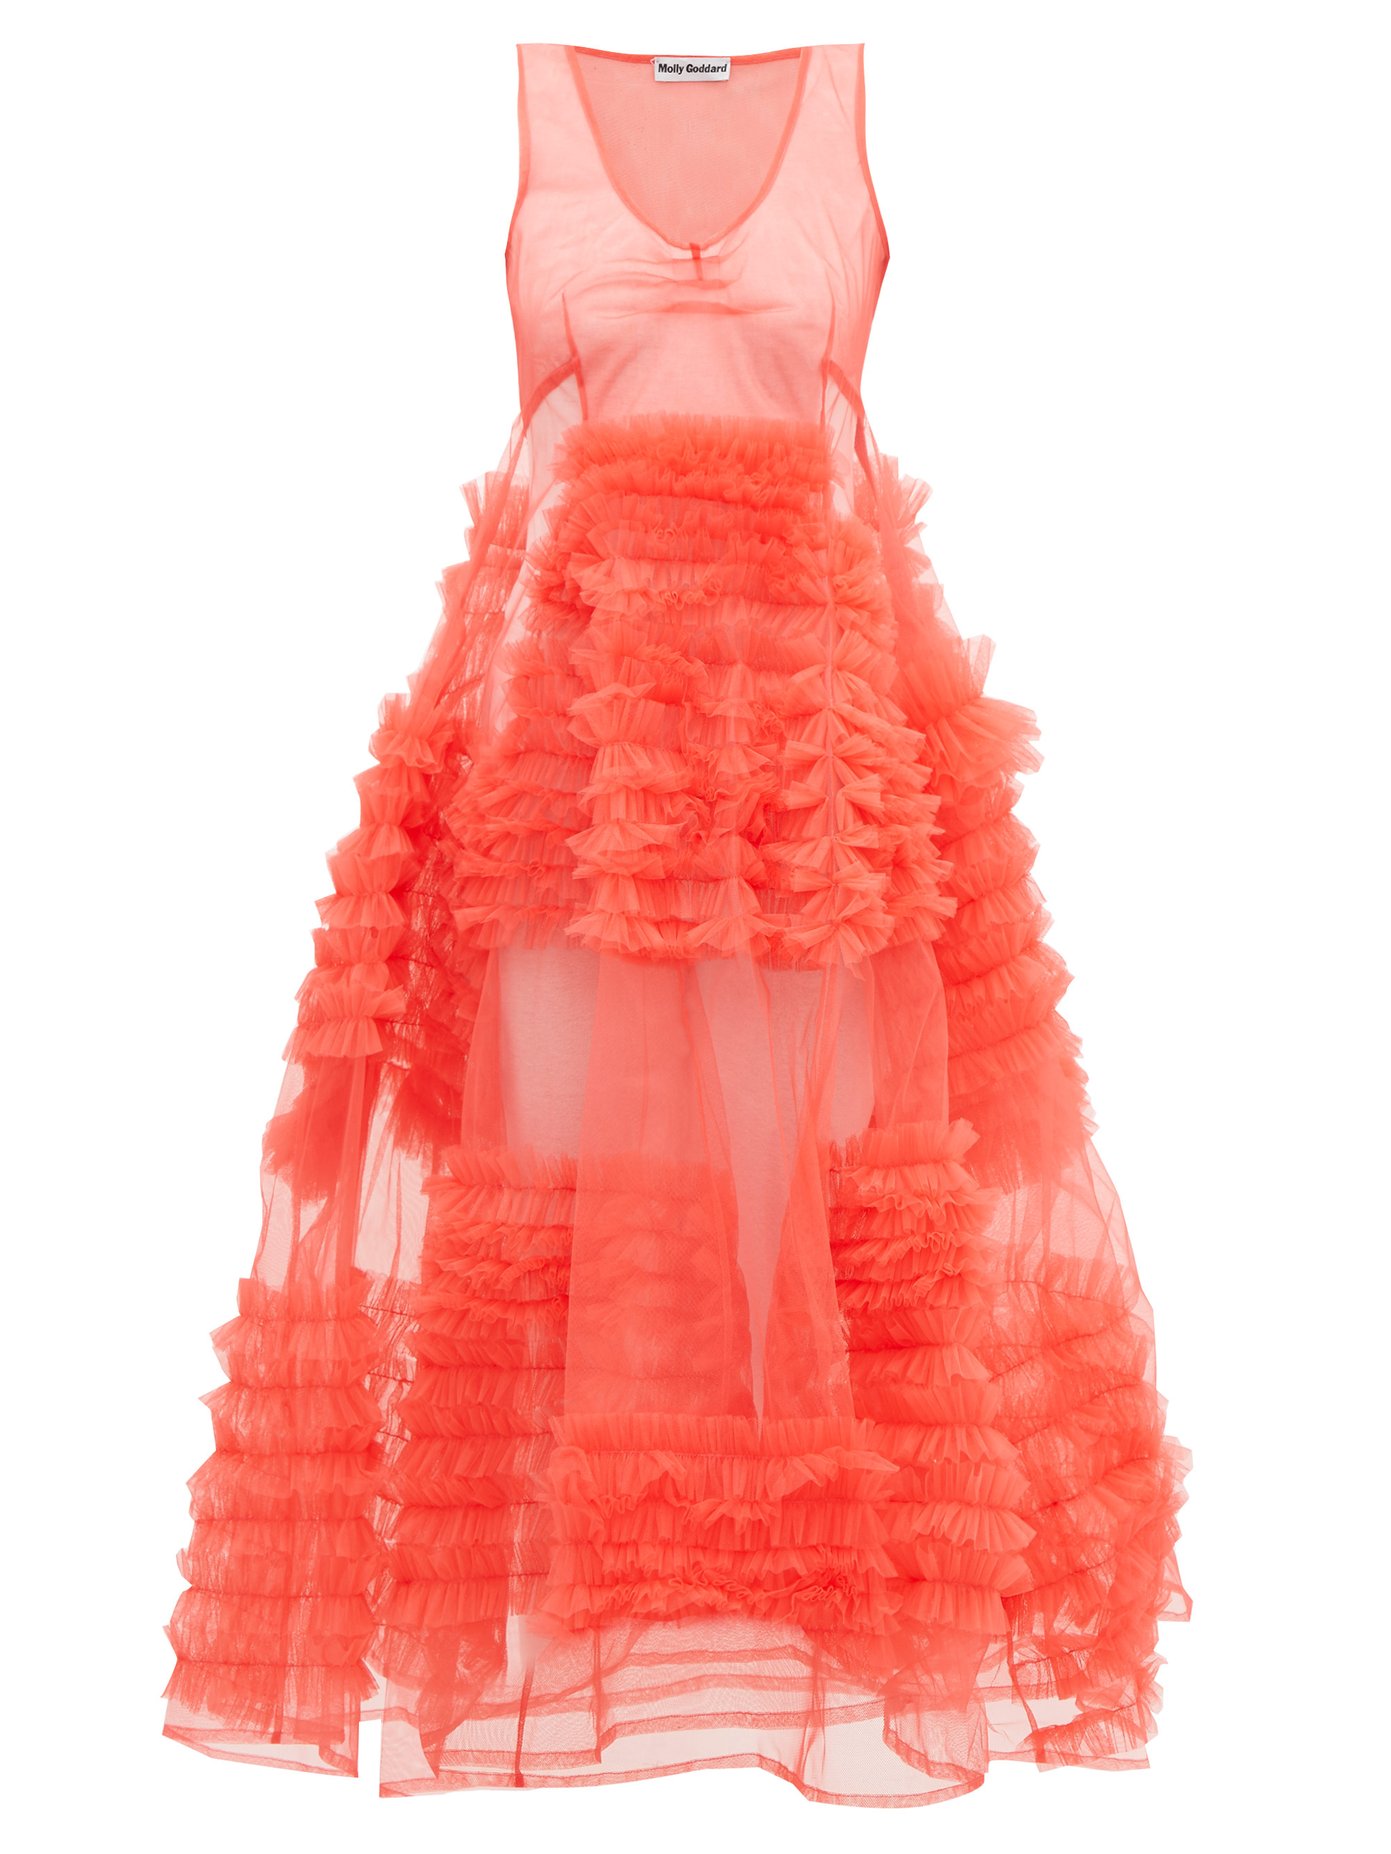 molly goddard pink dress